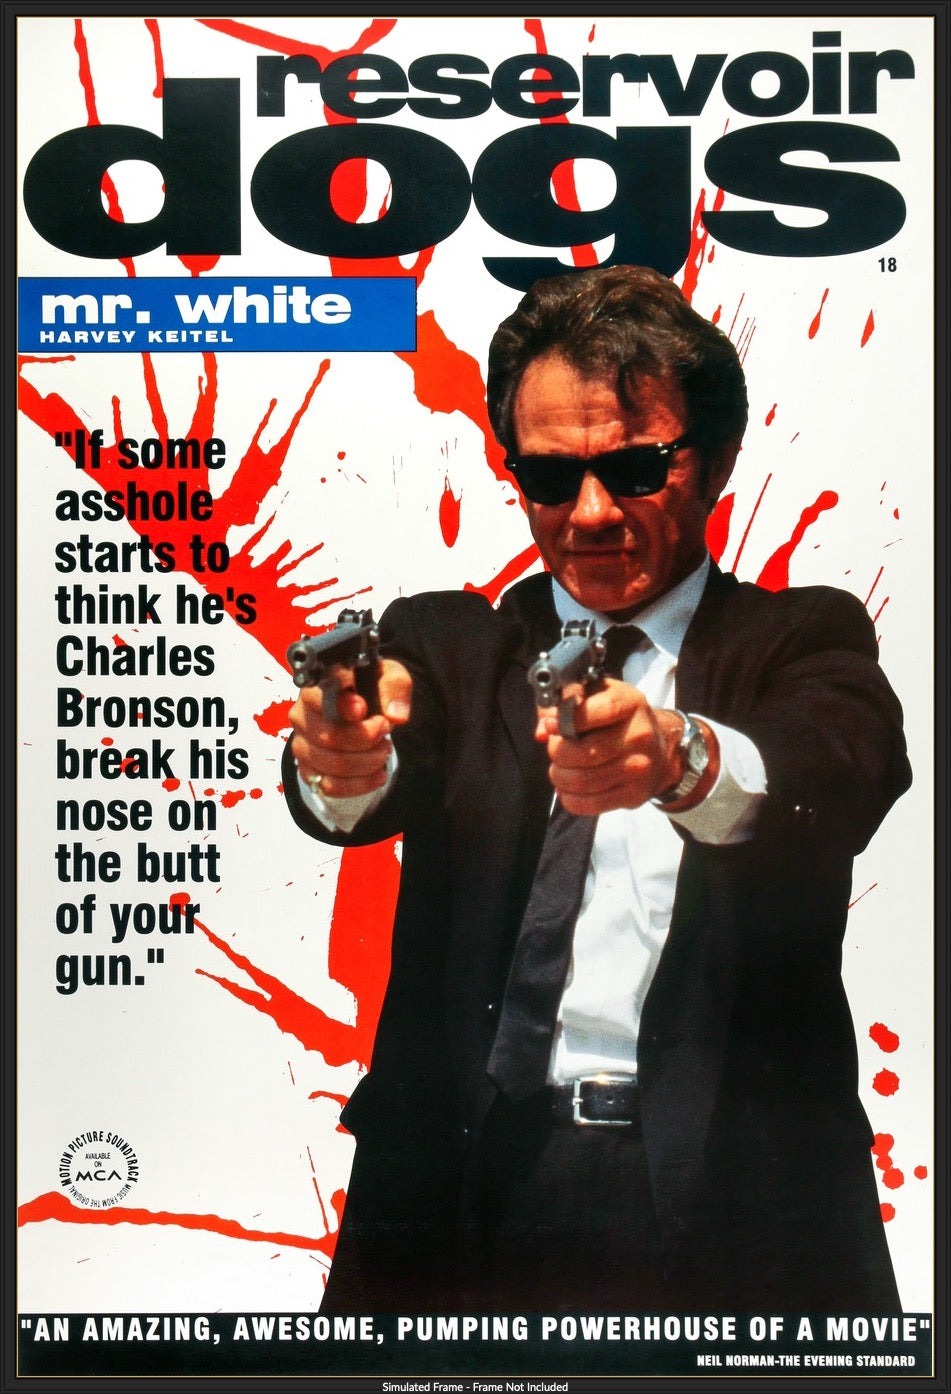 Reservoir Dogs (1992) original movie poster for sale at Original Film Art